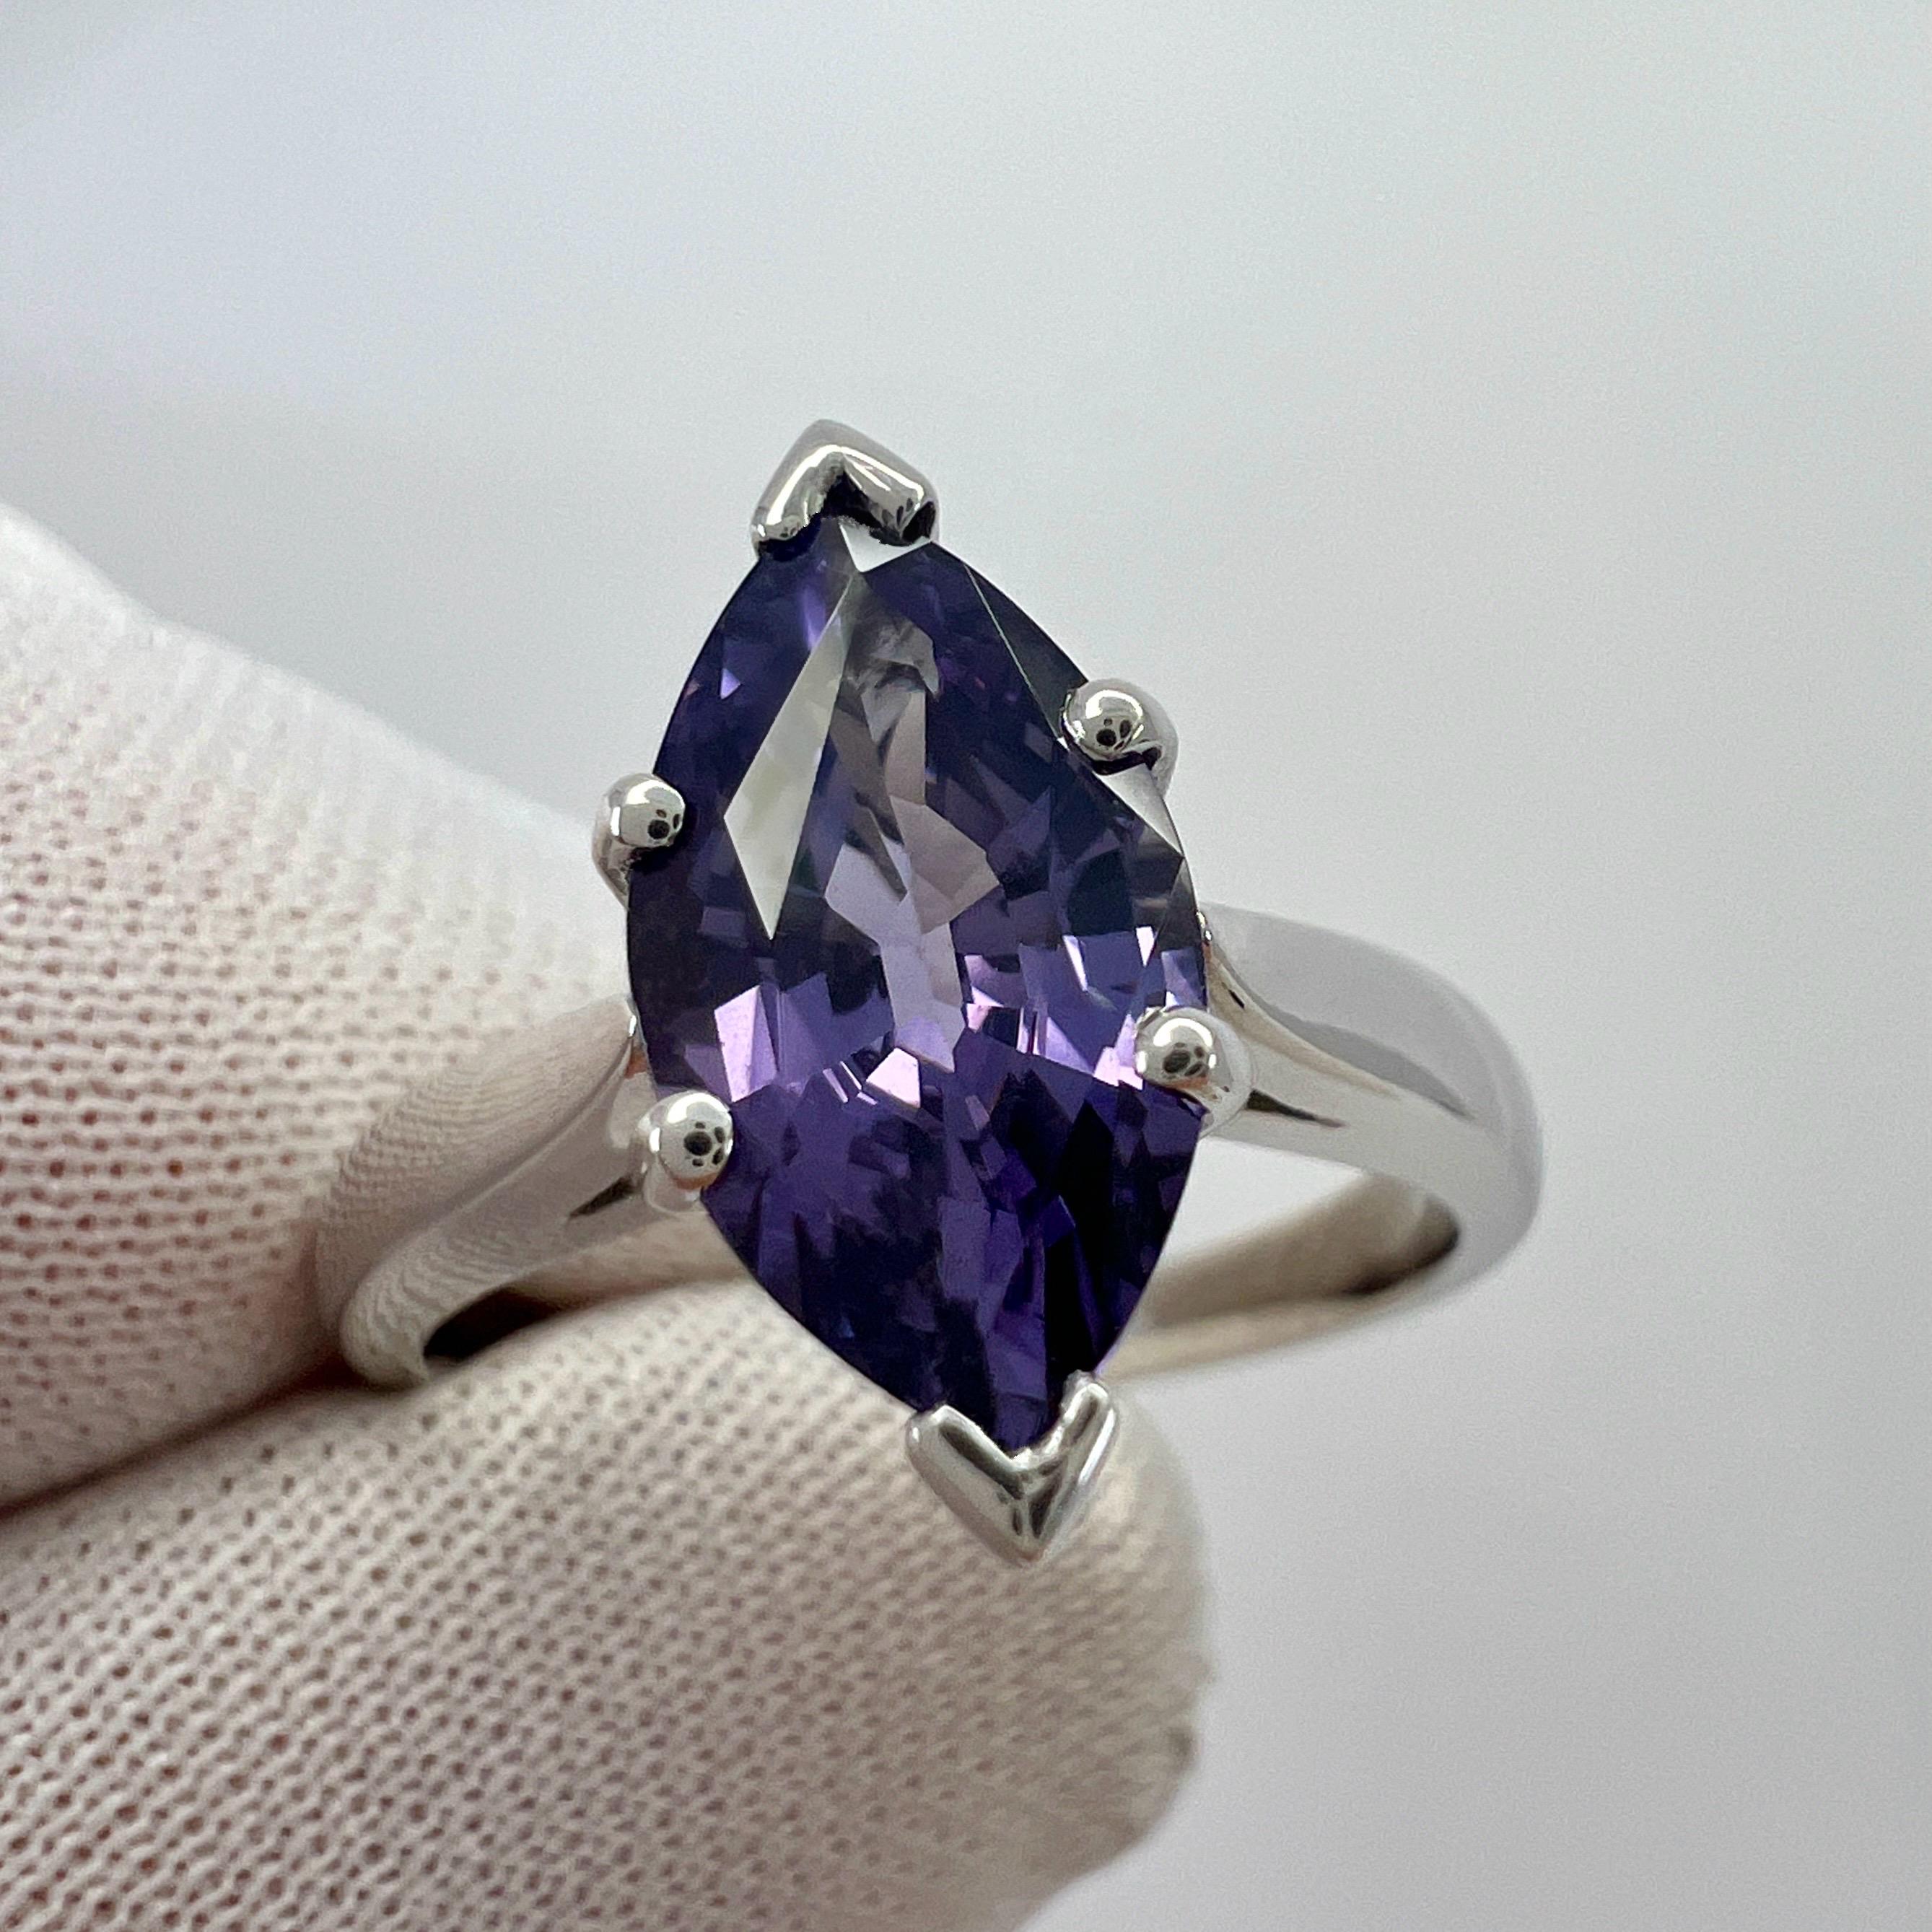 Unique 2.13ct Vivid Purple Violet Spinel Marquise 18k White Gold Solitaire Ring For Sale 3